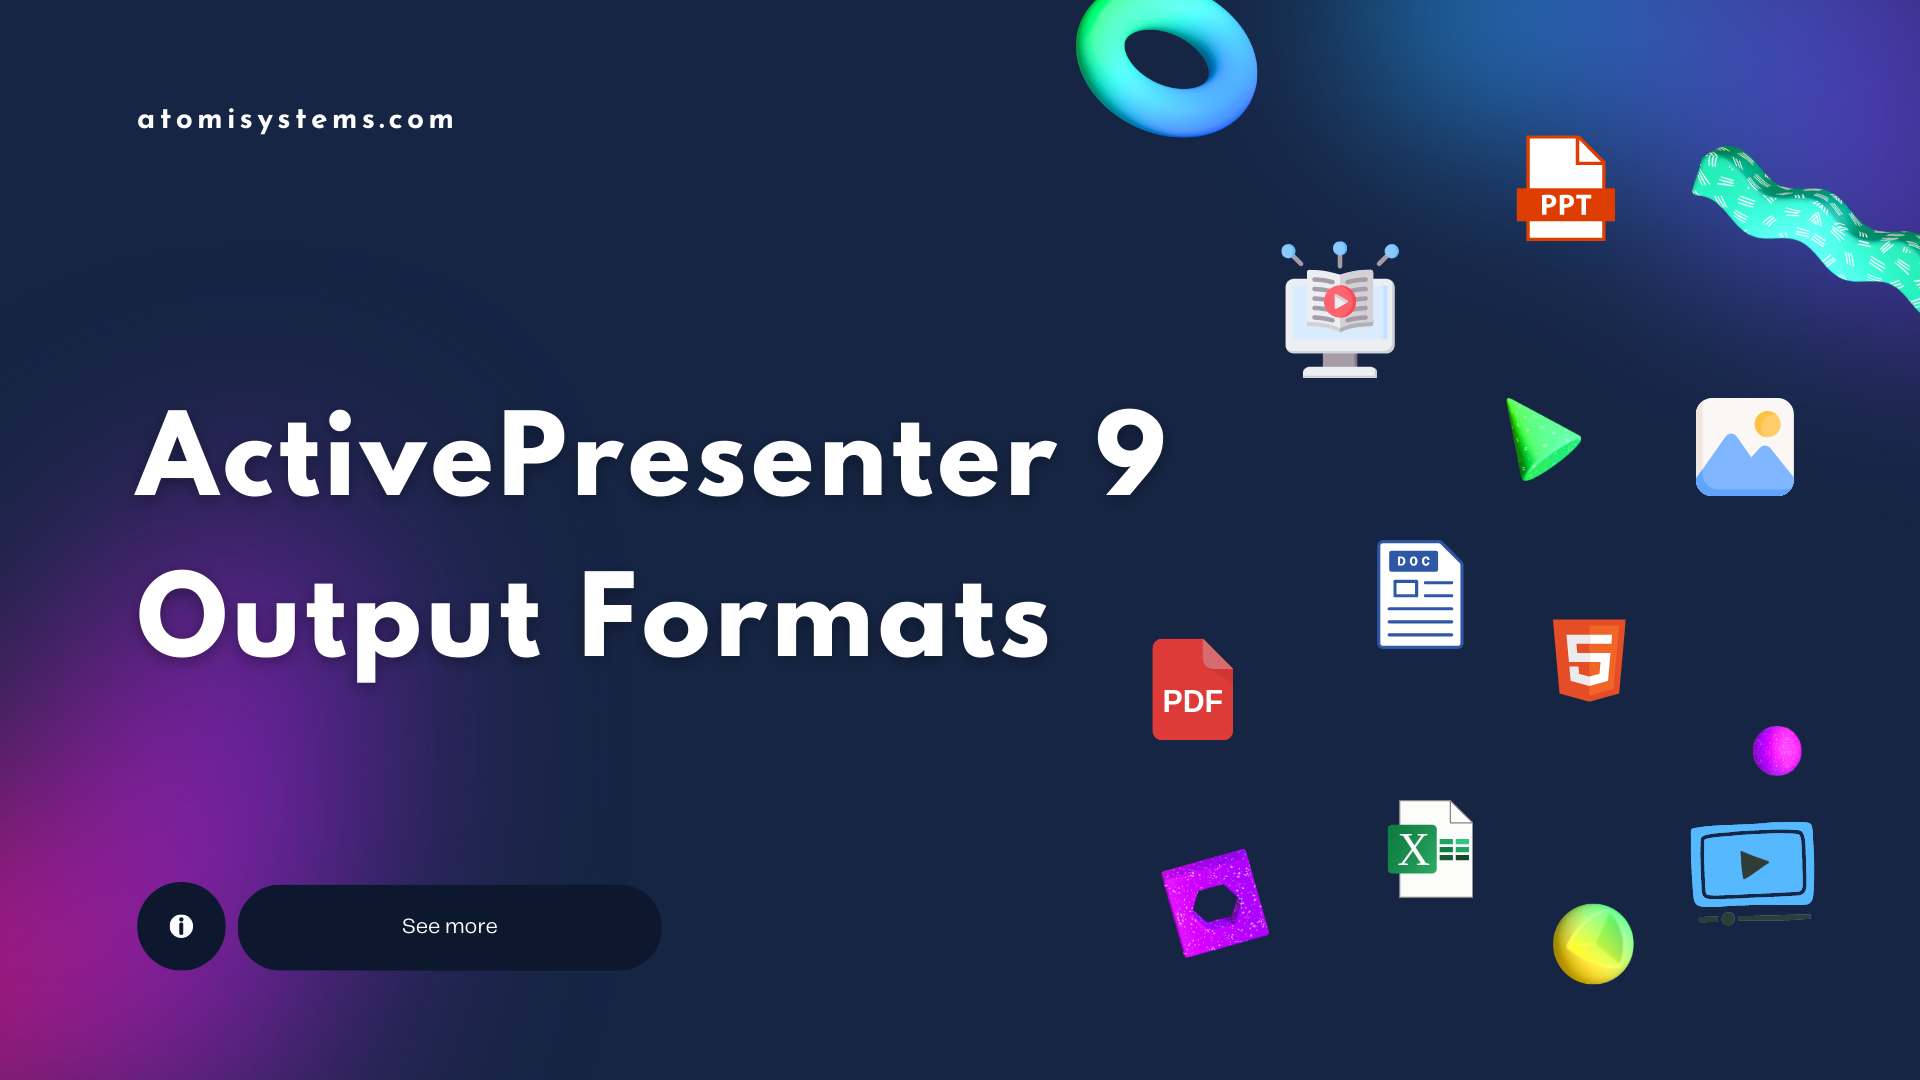 ActivePresenter 9 Output Formats Overview